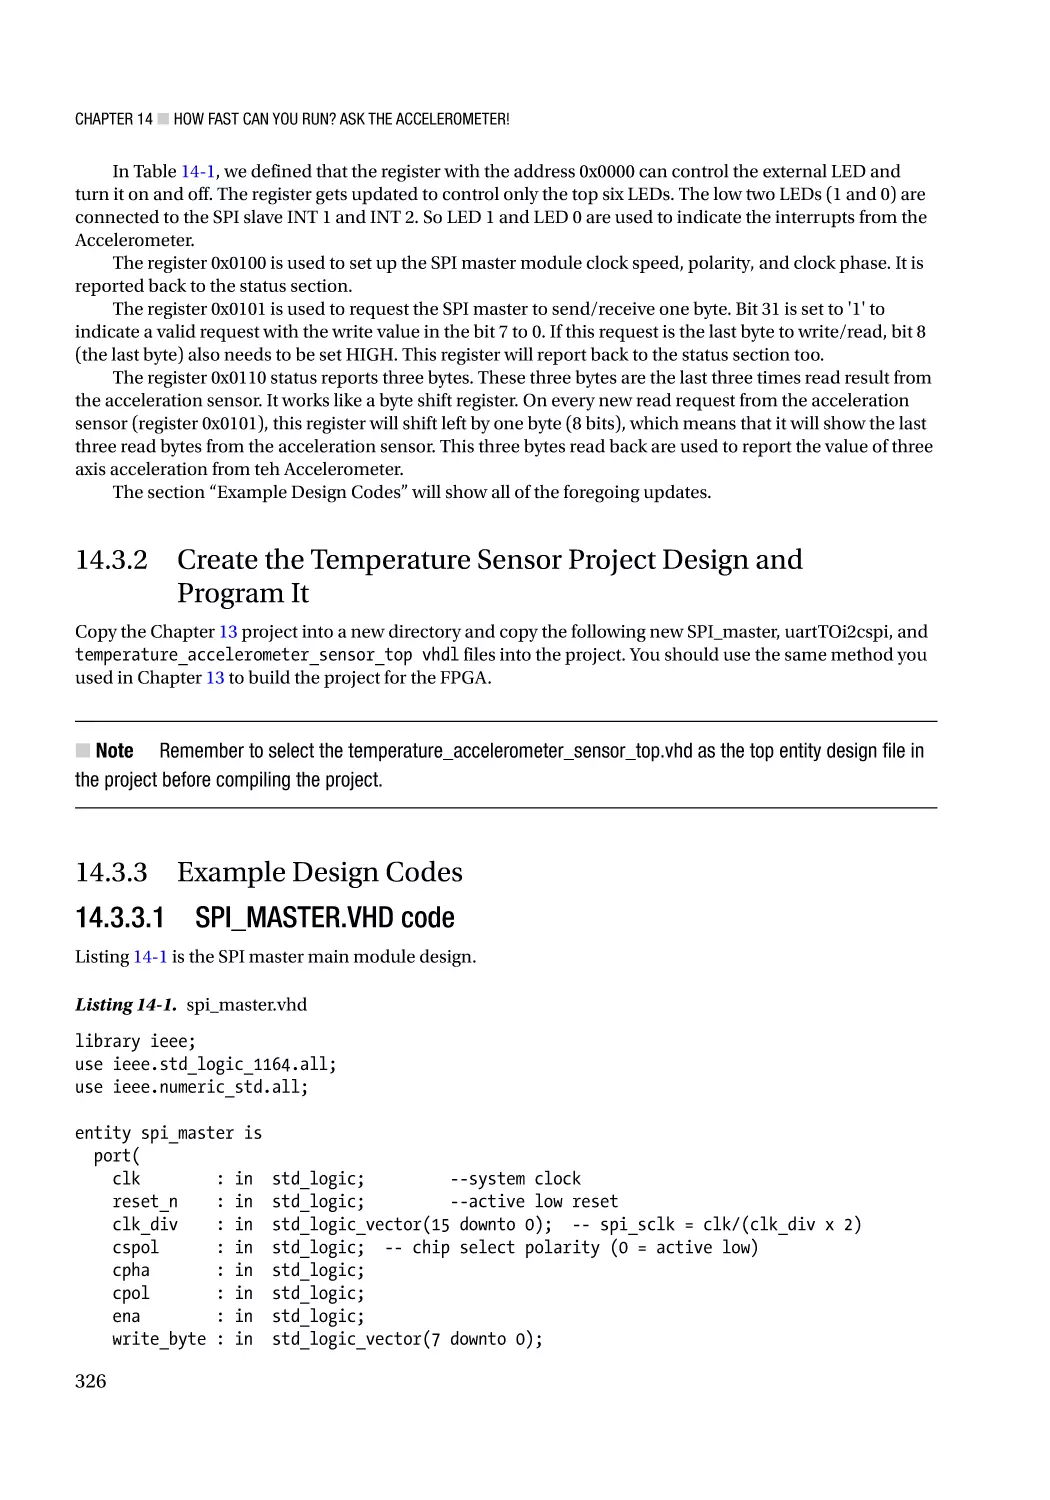 14.3.2 Create the Temperature Sensor Project Design and Program It
14.3.3 Example Design Codes
14.3.3.1 SPI_MASTER.VHD code